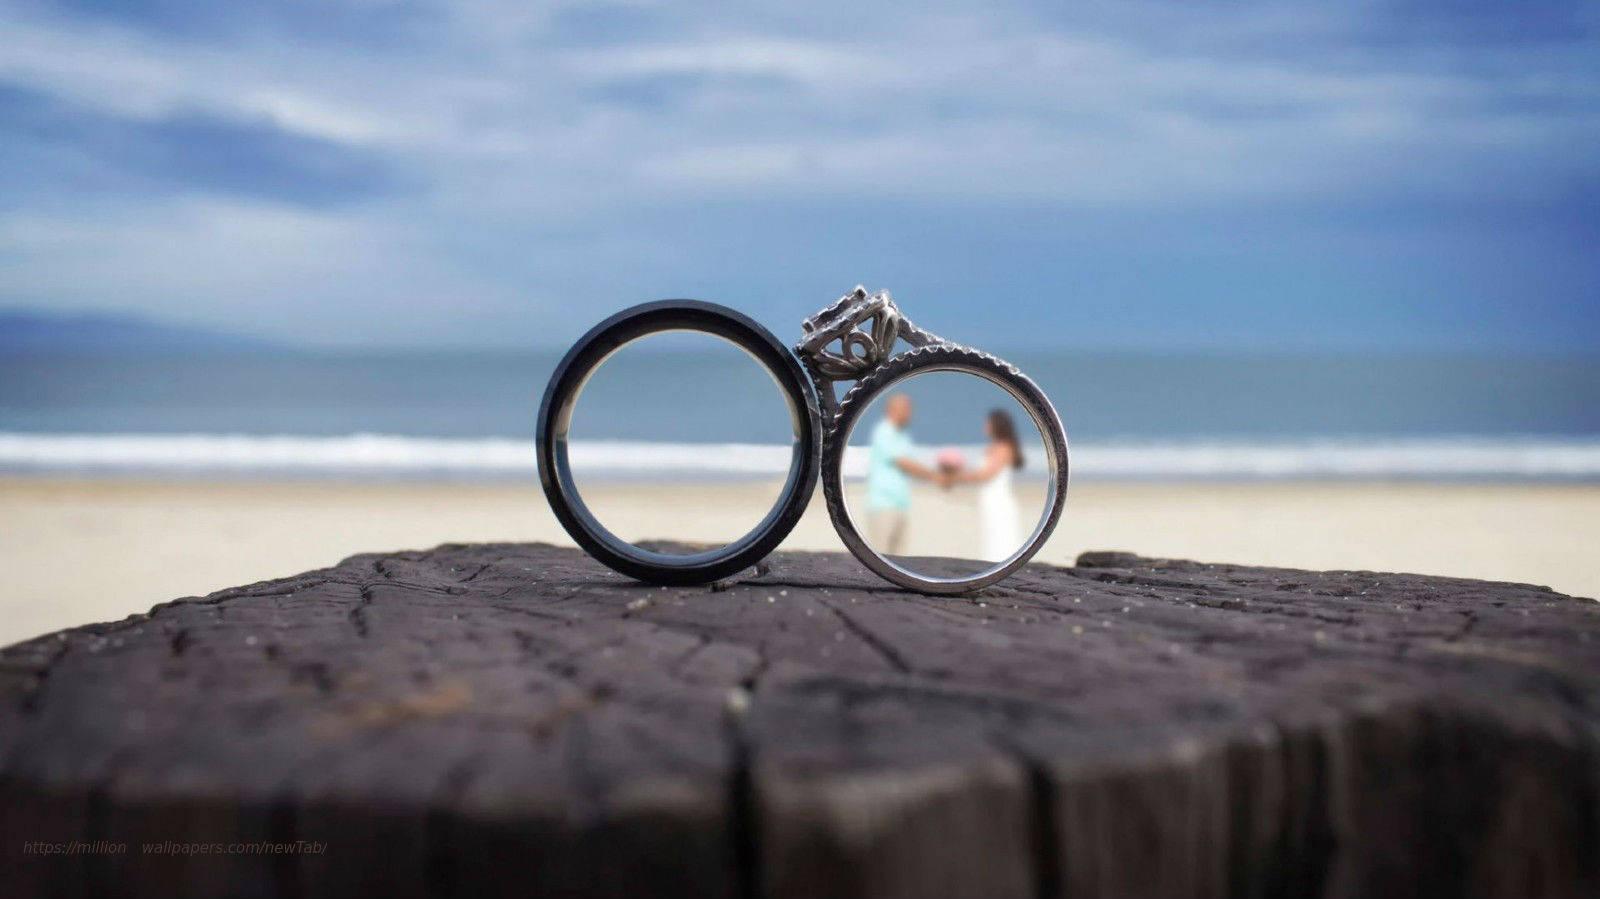 Wedding Rings On The Beach Wallpaper